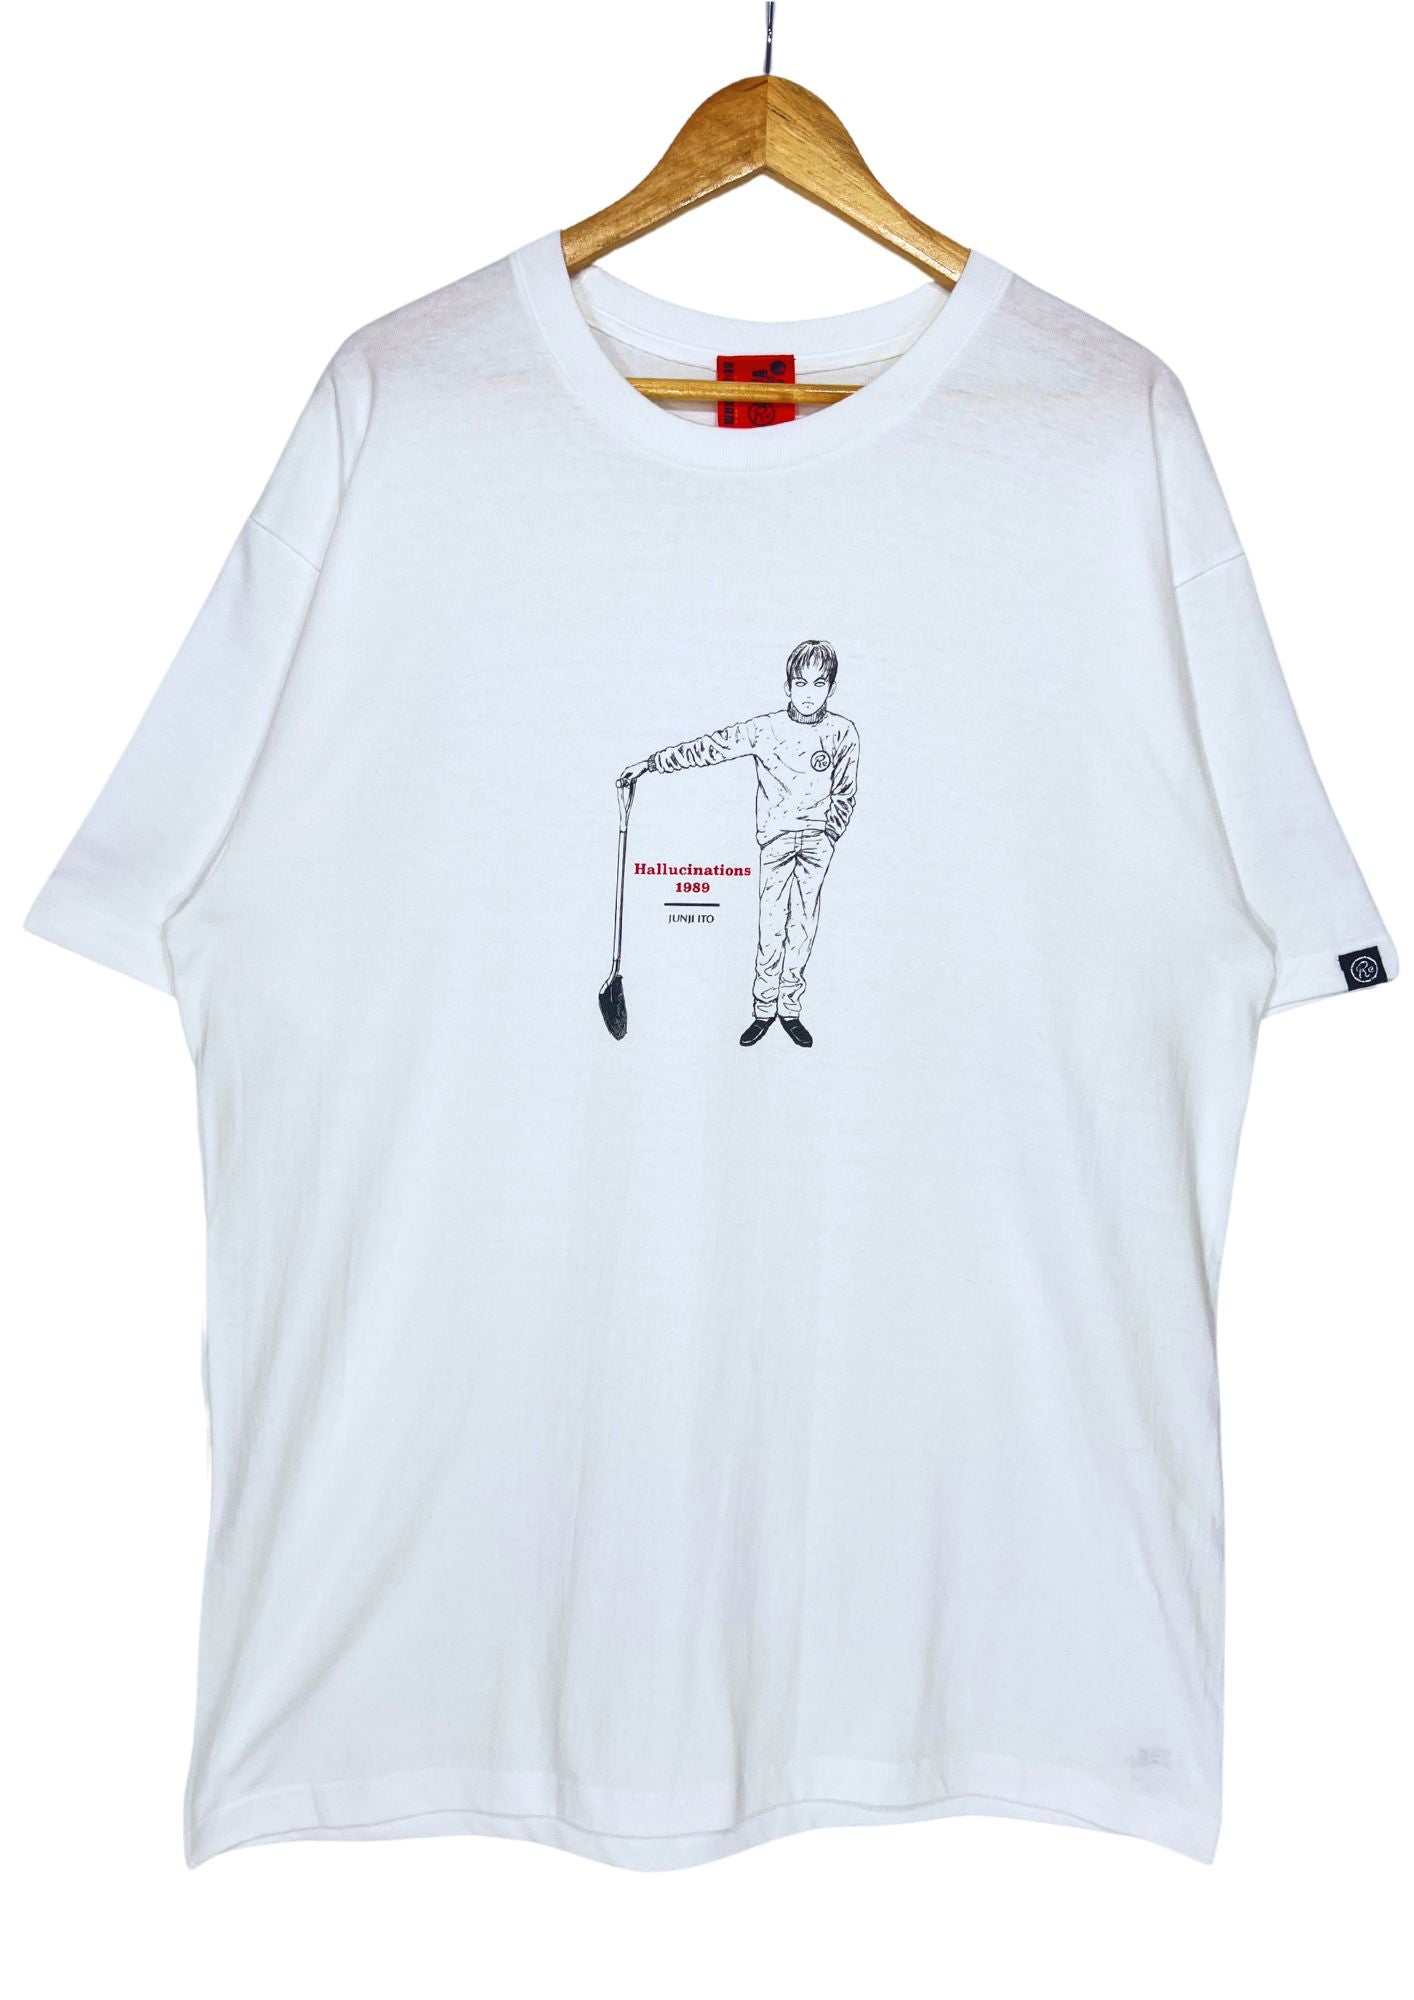 2020 Junji Ito ' Hallucinations' x RE:SHAZAM Oshikiri T-shirt